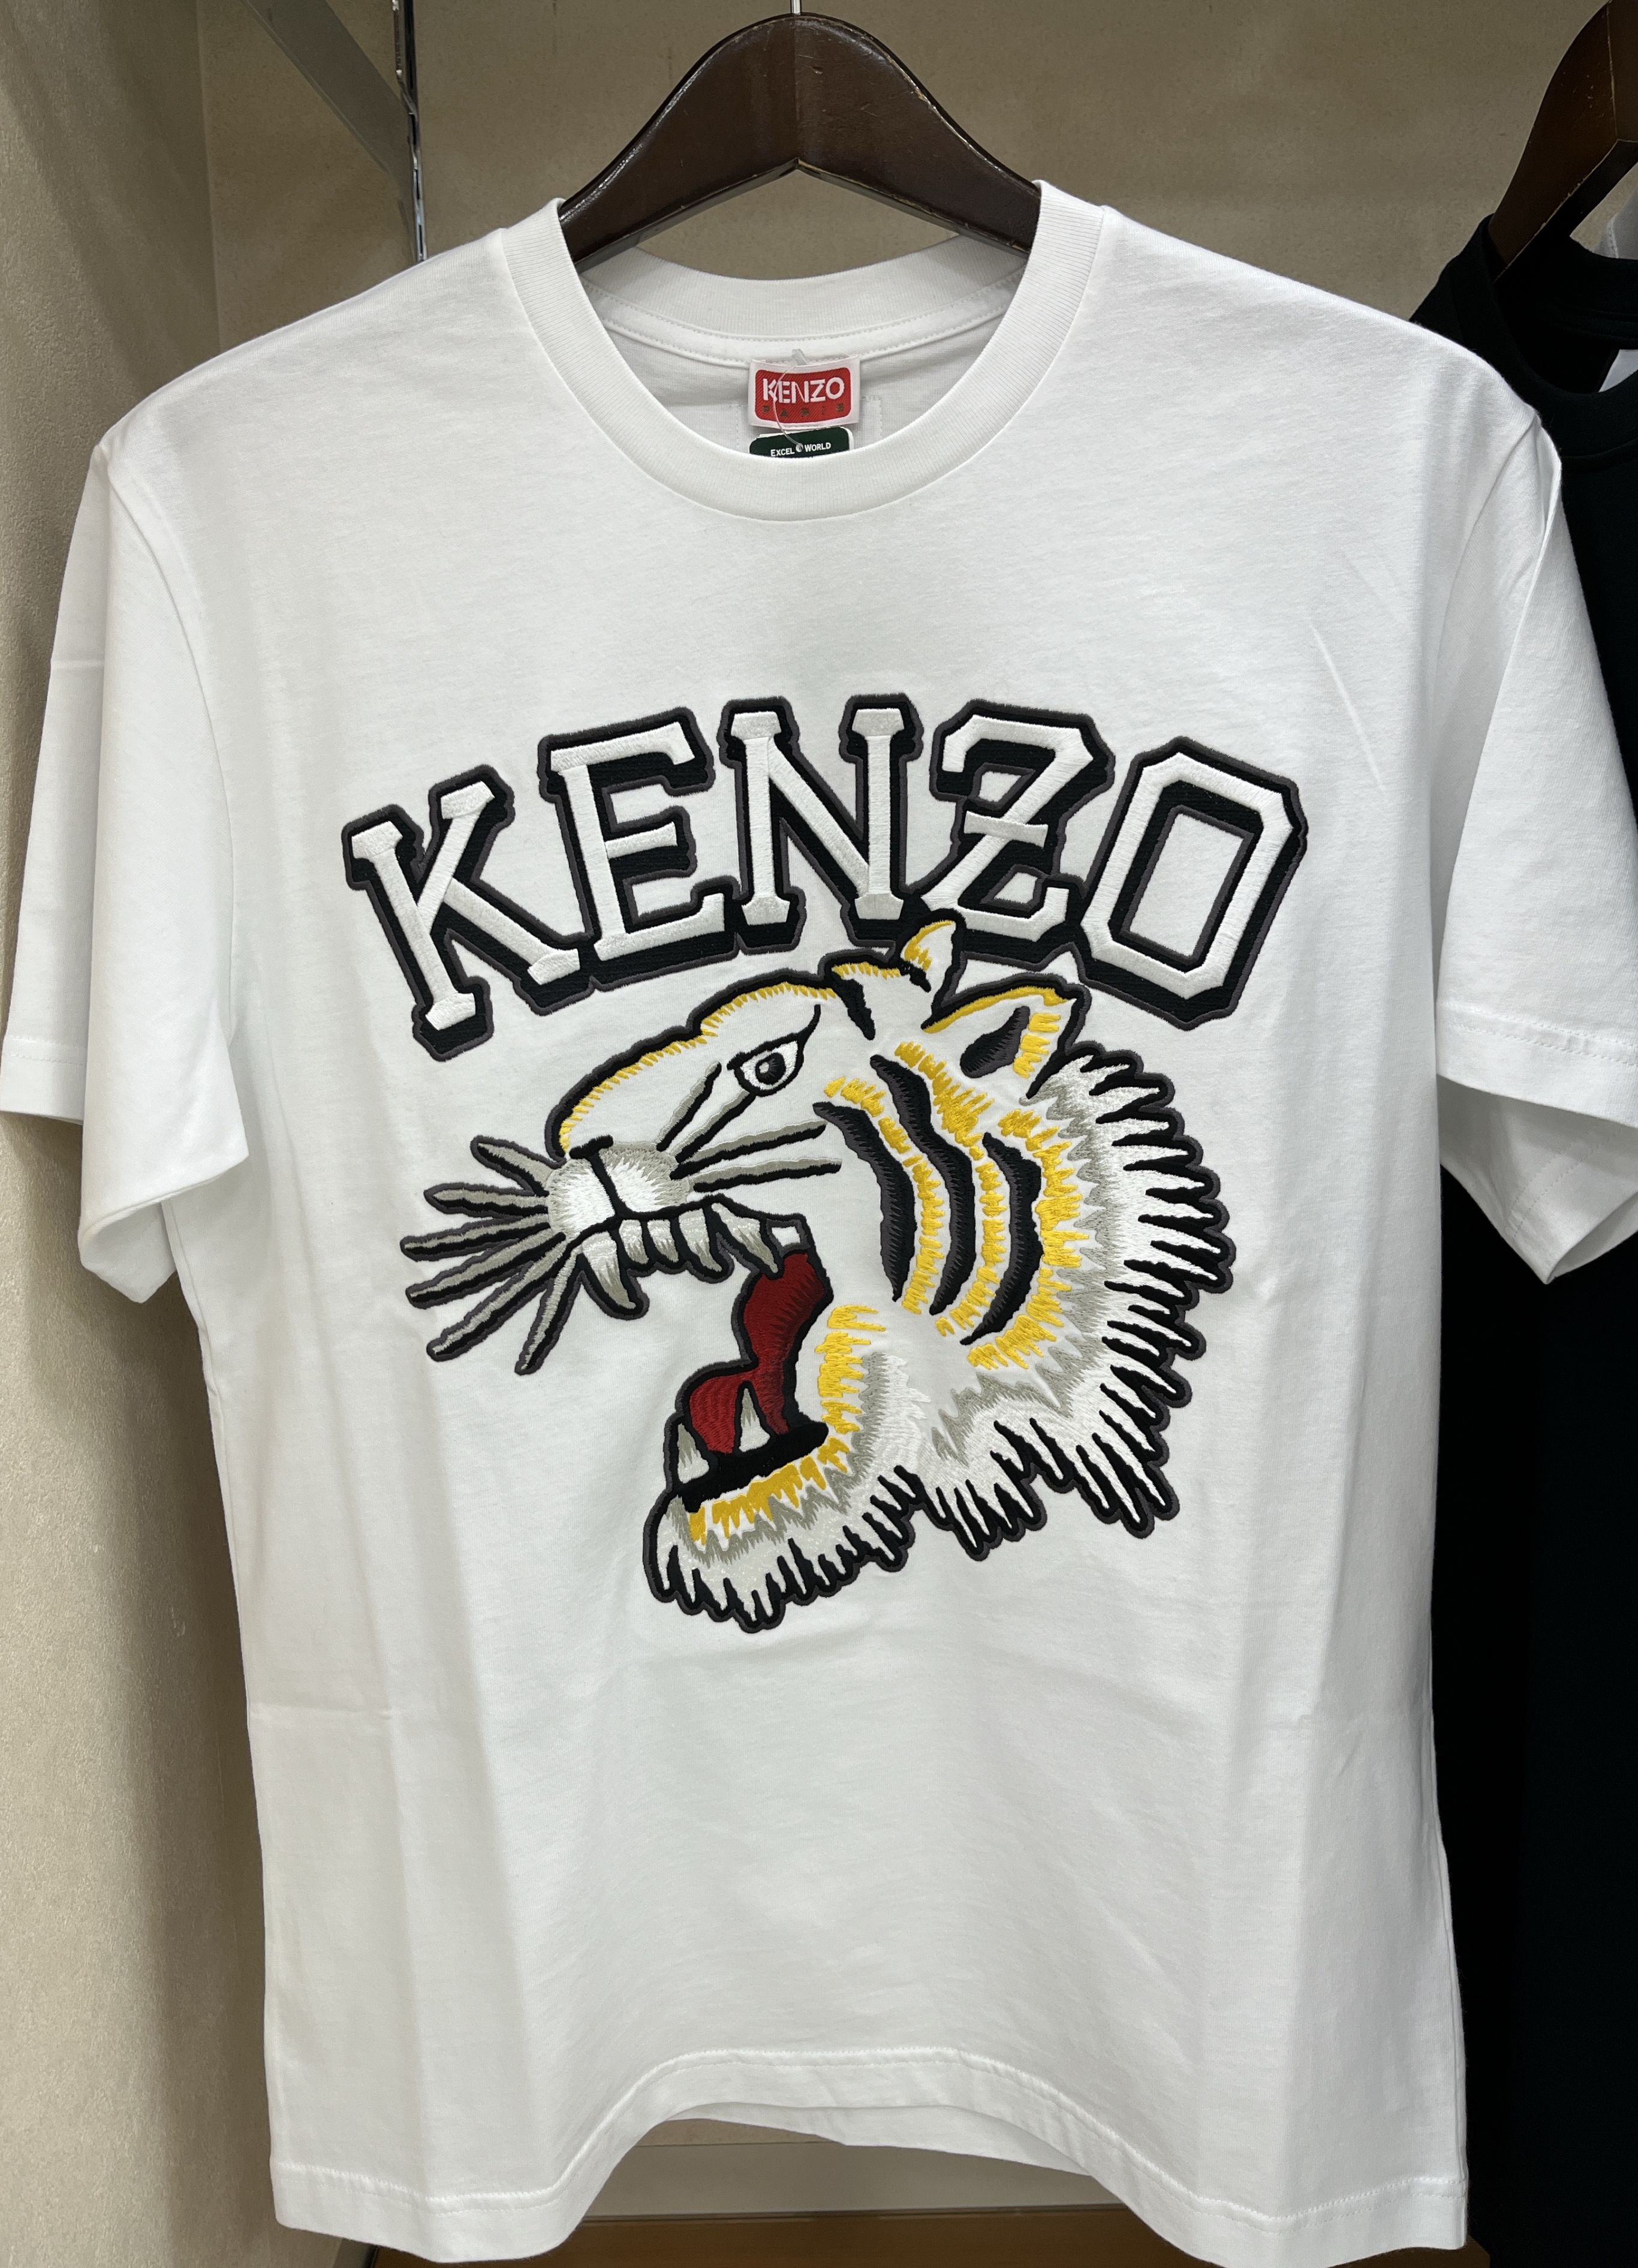 『KENZO』Tシャツ入荷